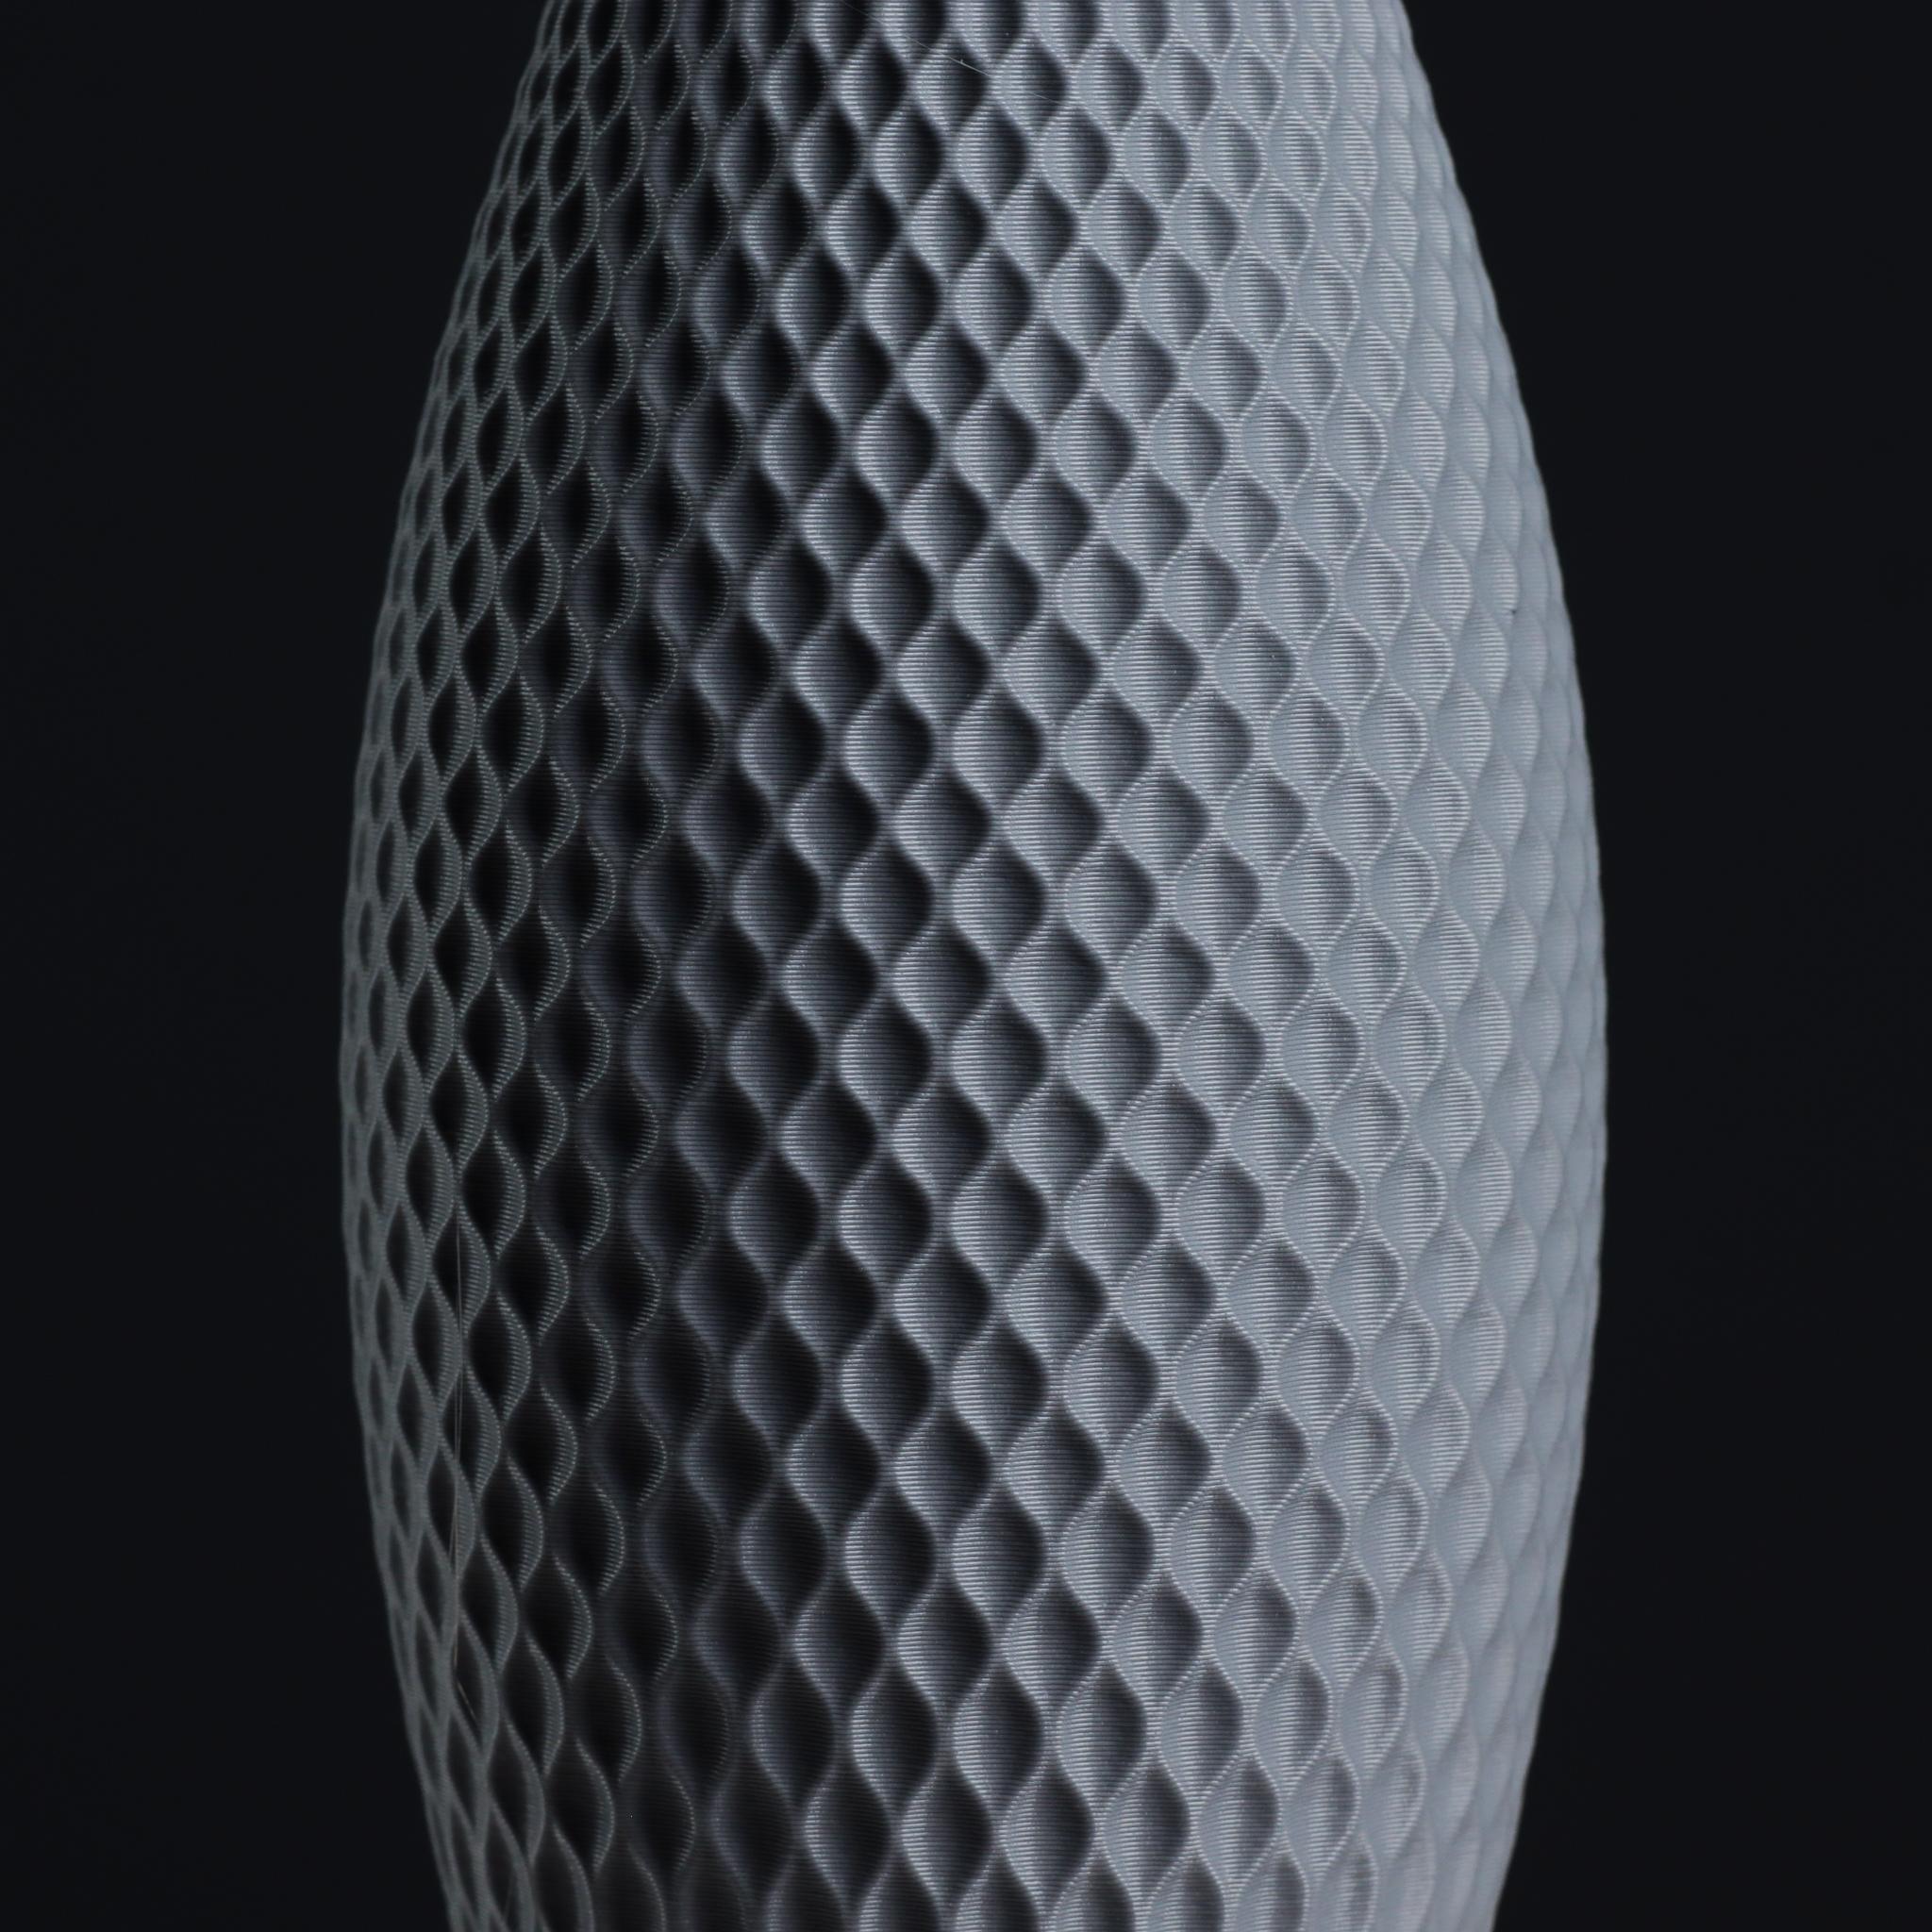  Generative Bulb Vase for Dried Flowers, (vase mode) 3d model